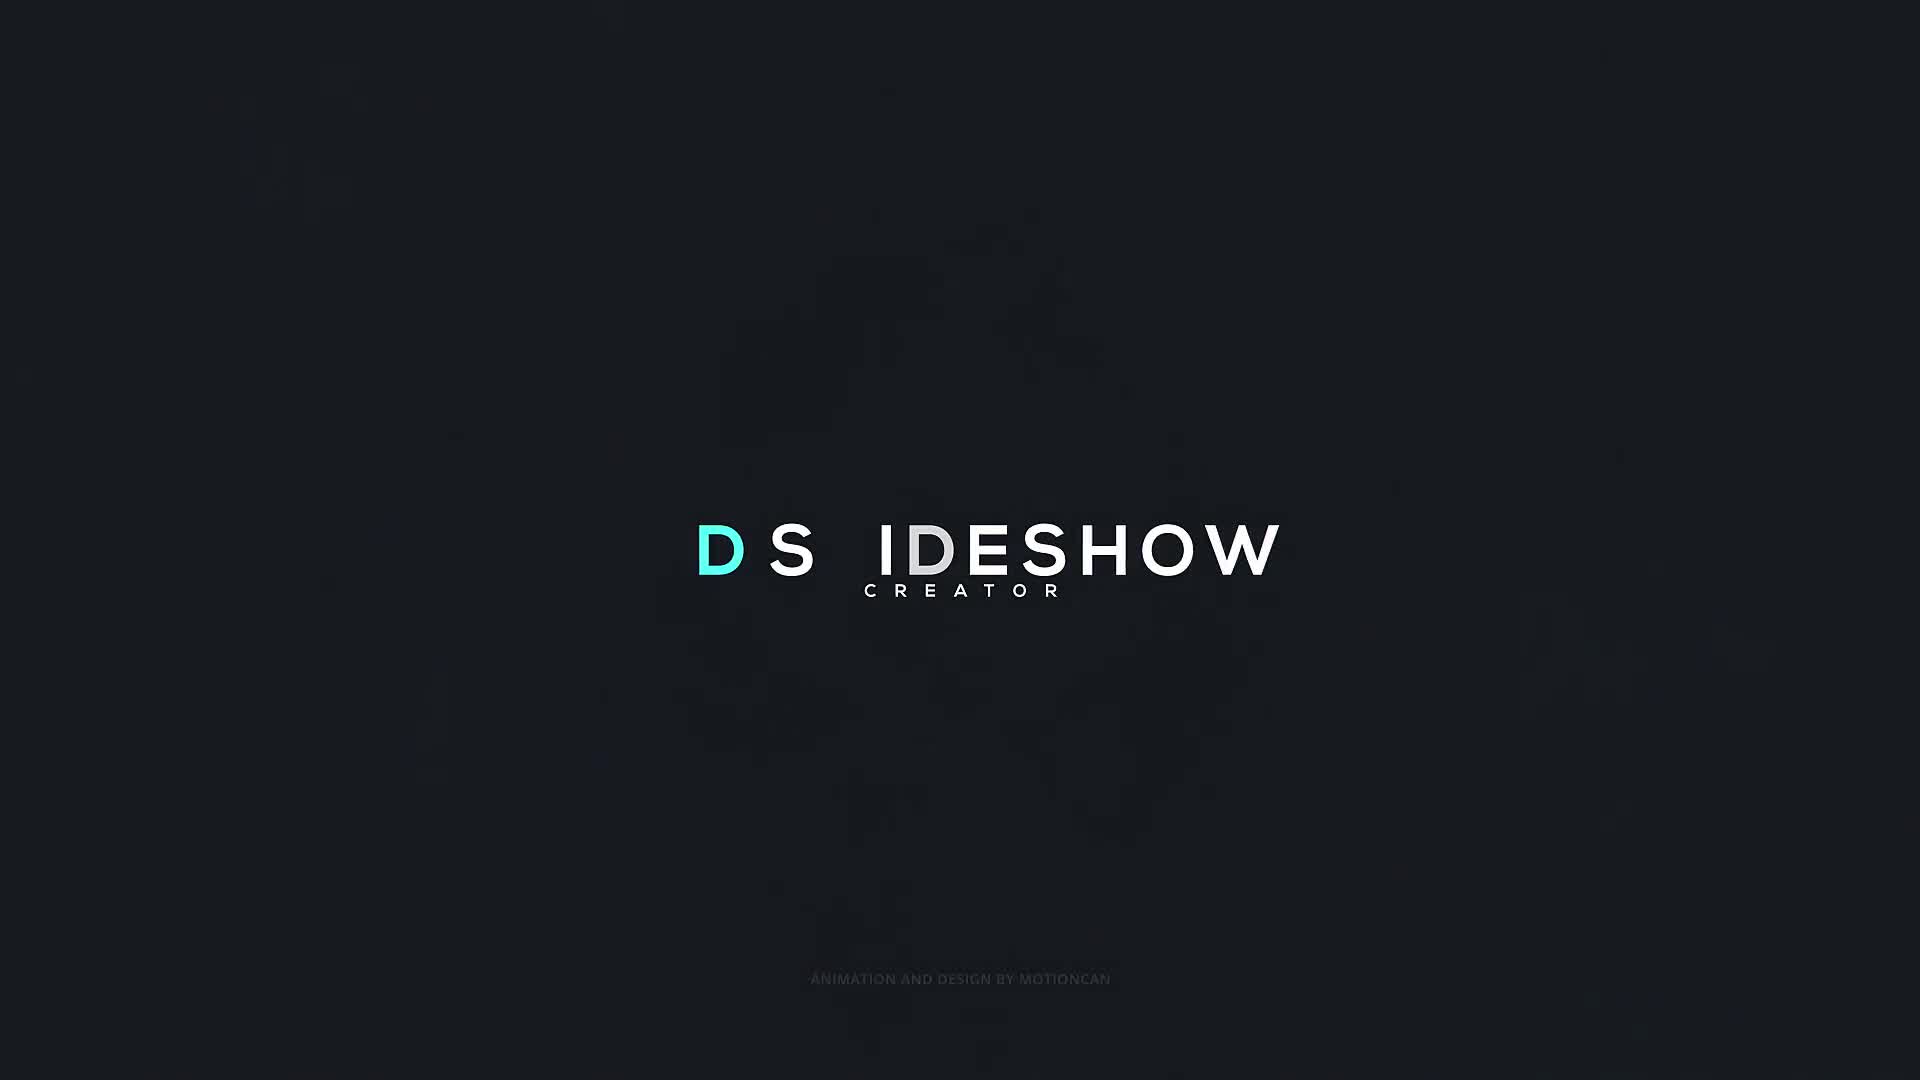 3D Slideshow Creator - Download Videohive 17953592